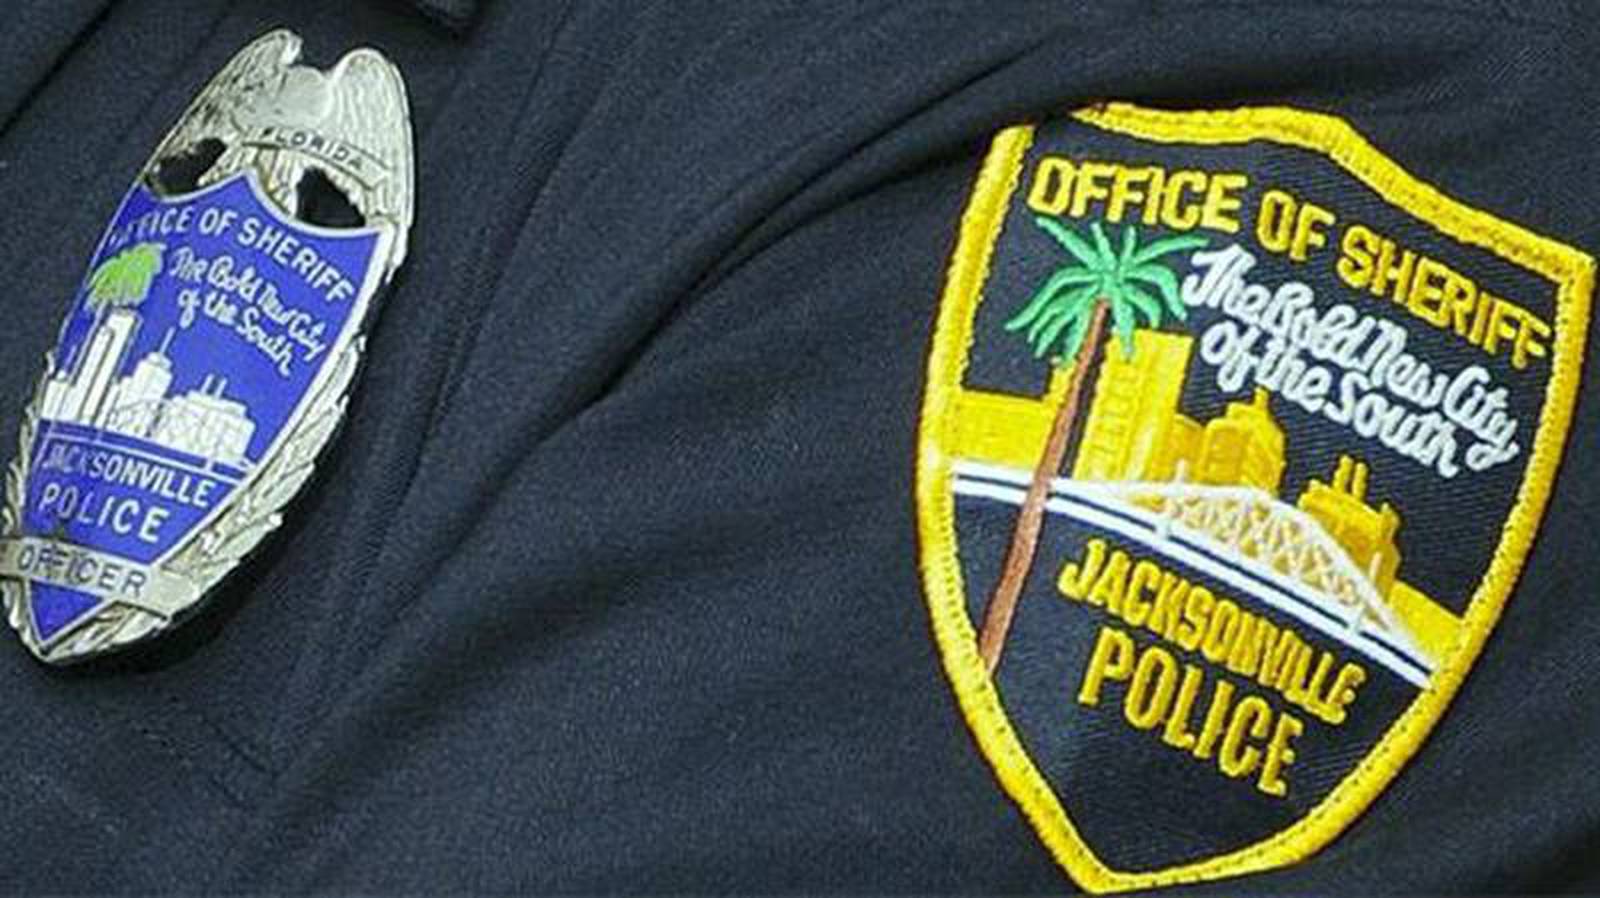 Man Shot On Jacksonvilles Northside Suspect Unknown Police Say Action News Jax 4830